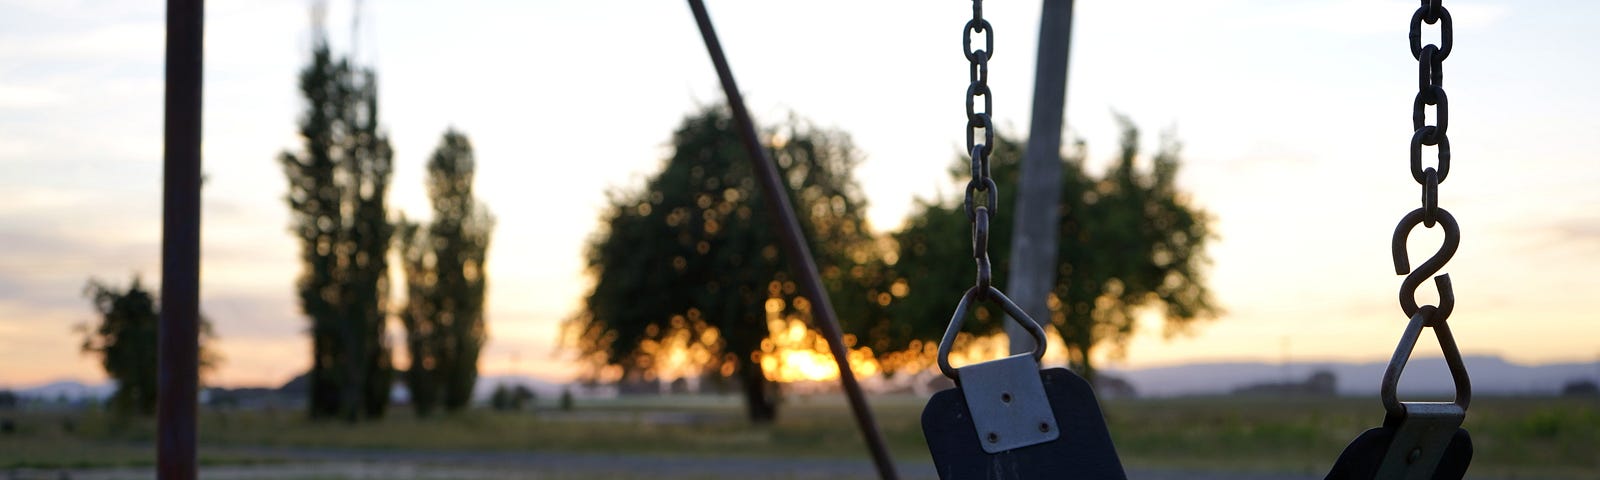 An empty swing in a children’s playground.